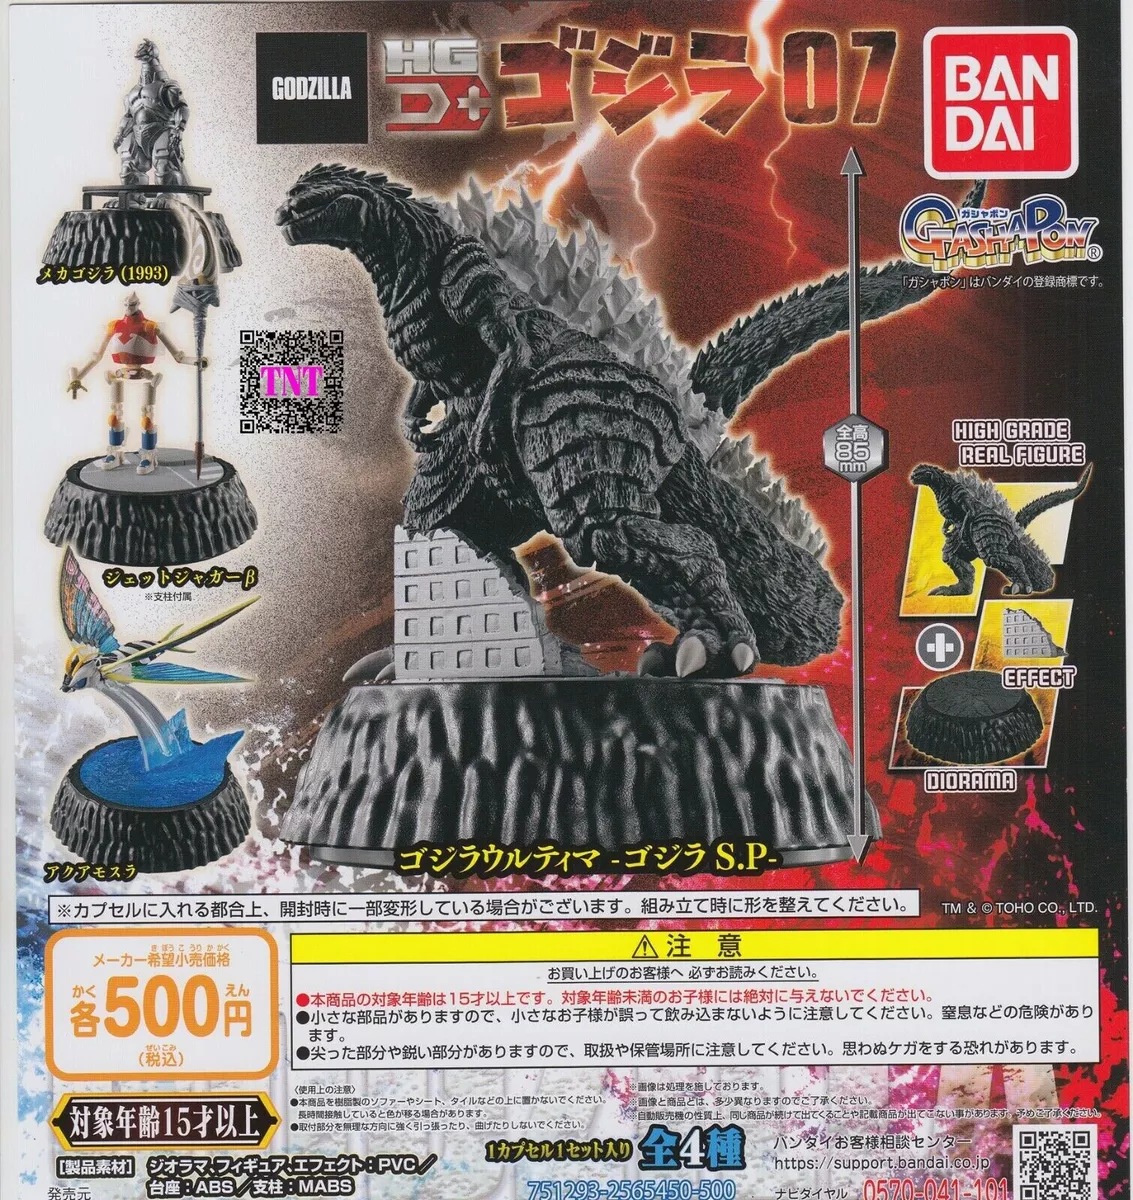 TNT14]Bandai Japanese Godzilla HG D+ 07 Gashapon Complete Set (4